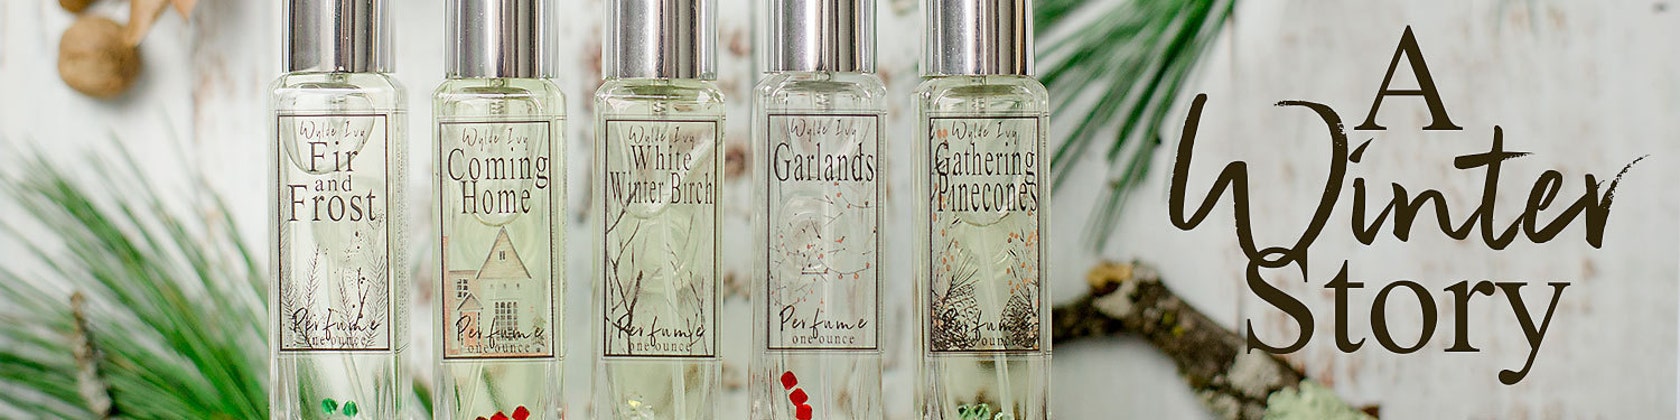 The Sugar Witch Perfume  Indie Fragrance by Wylde Ivy – Wylde Ivy